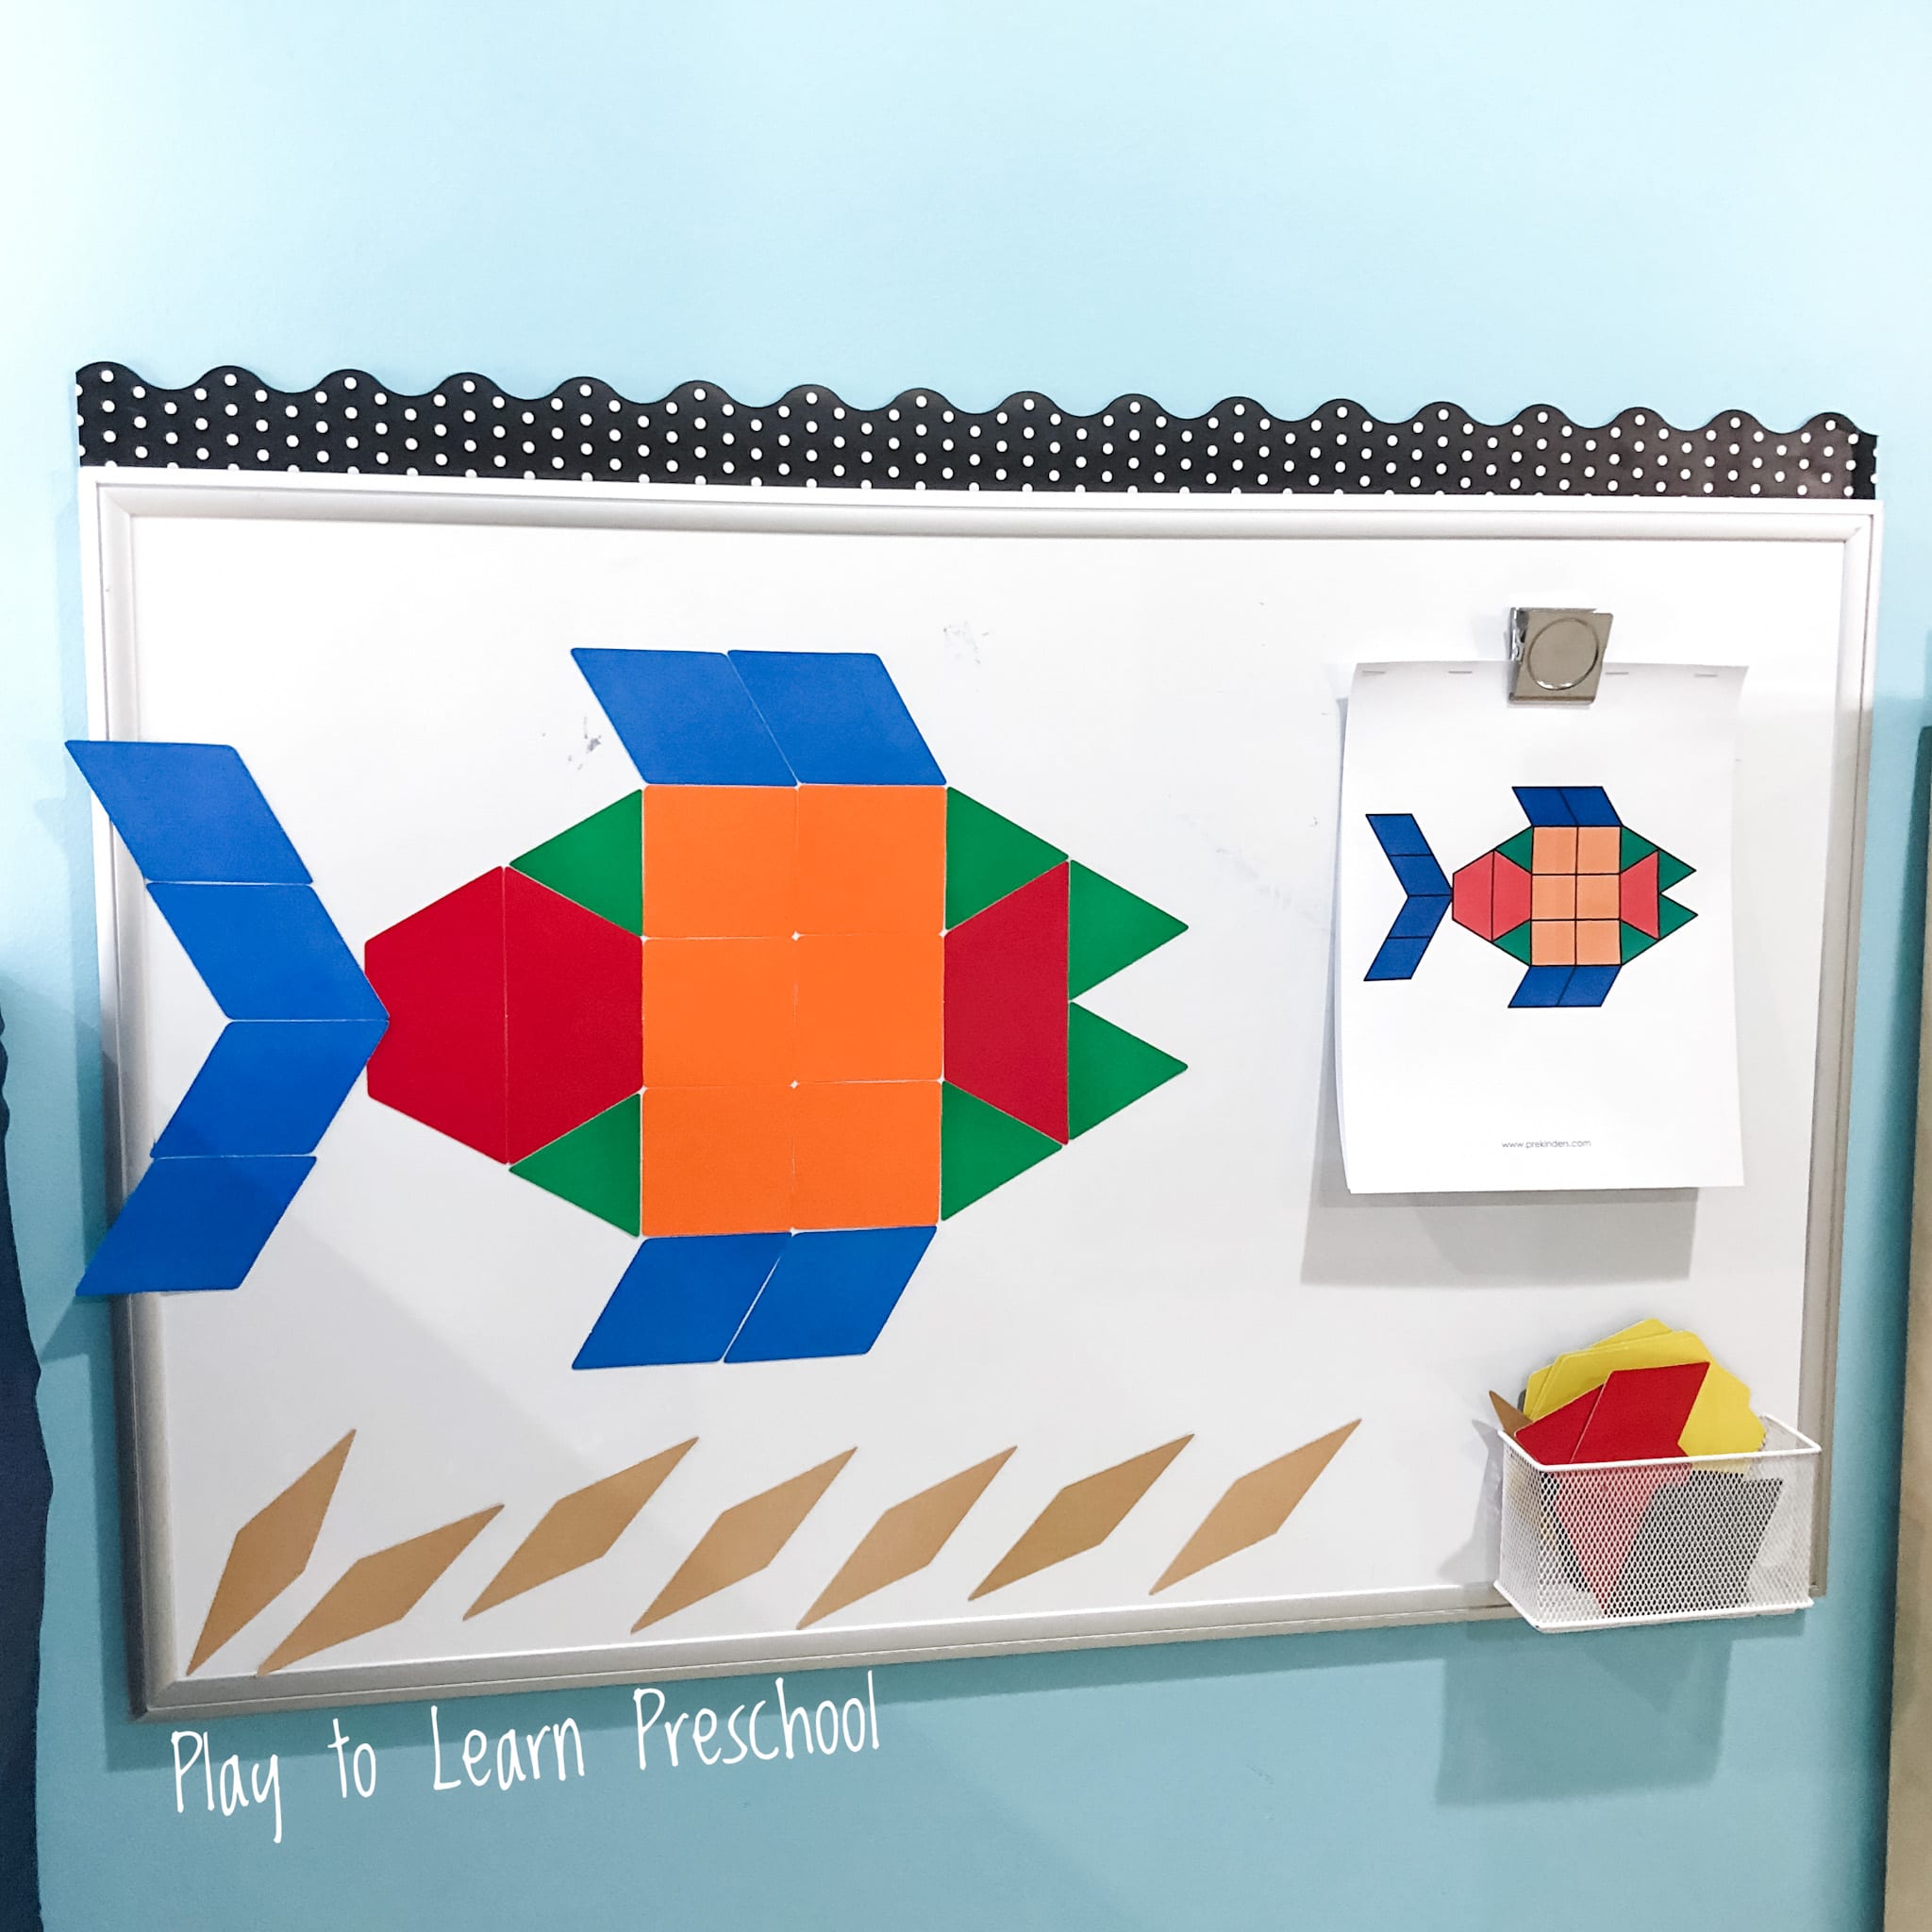 interactive bulletin boards preschool classroom